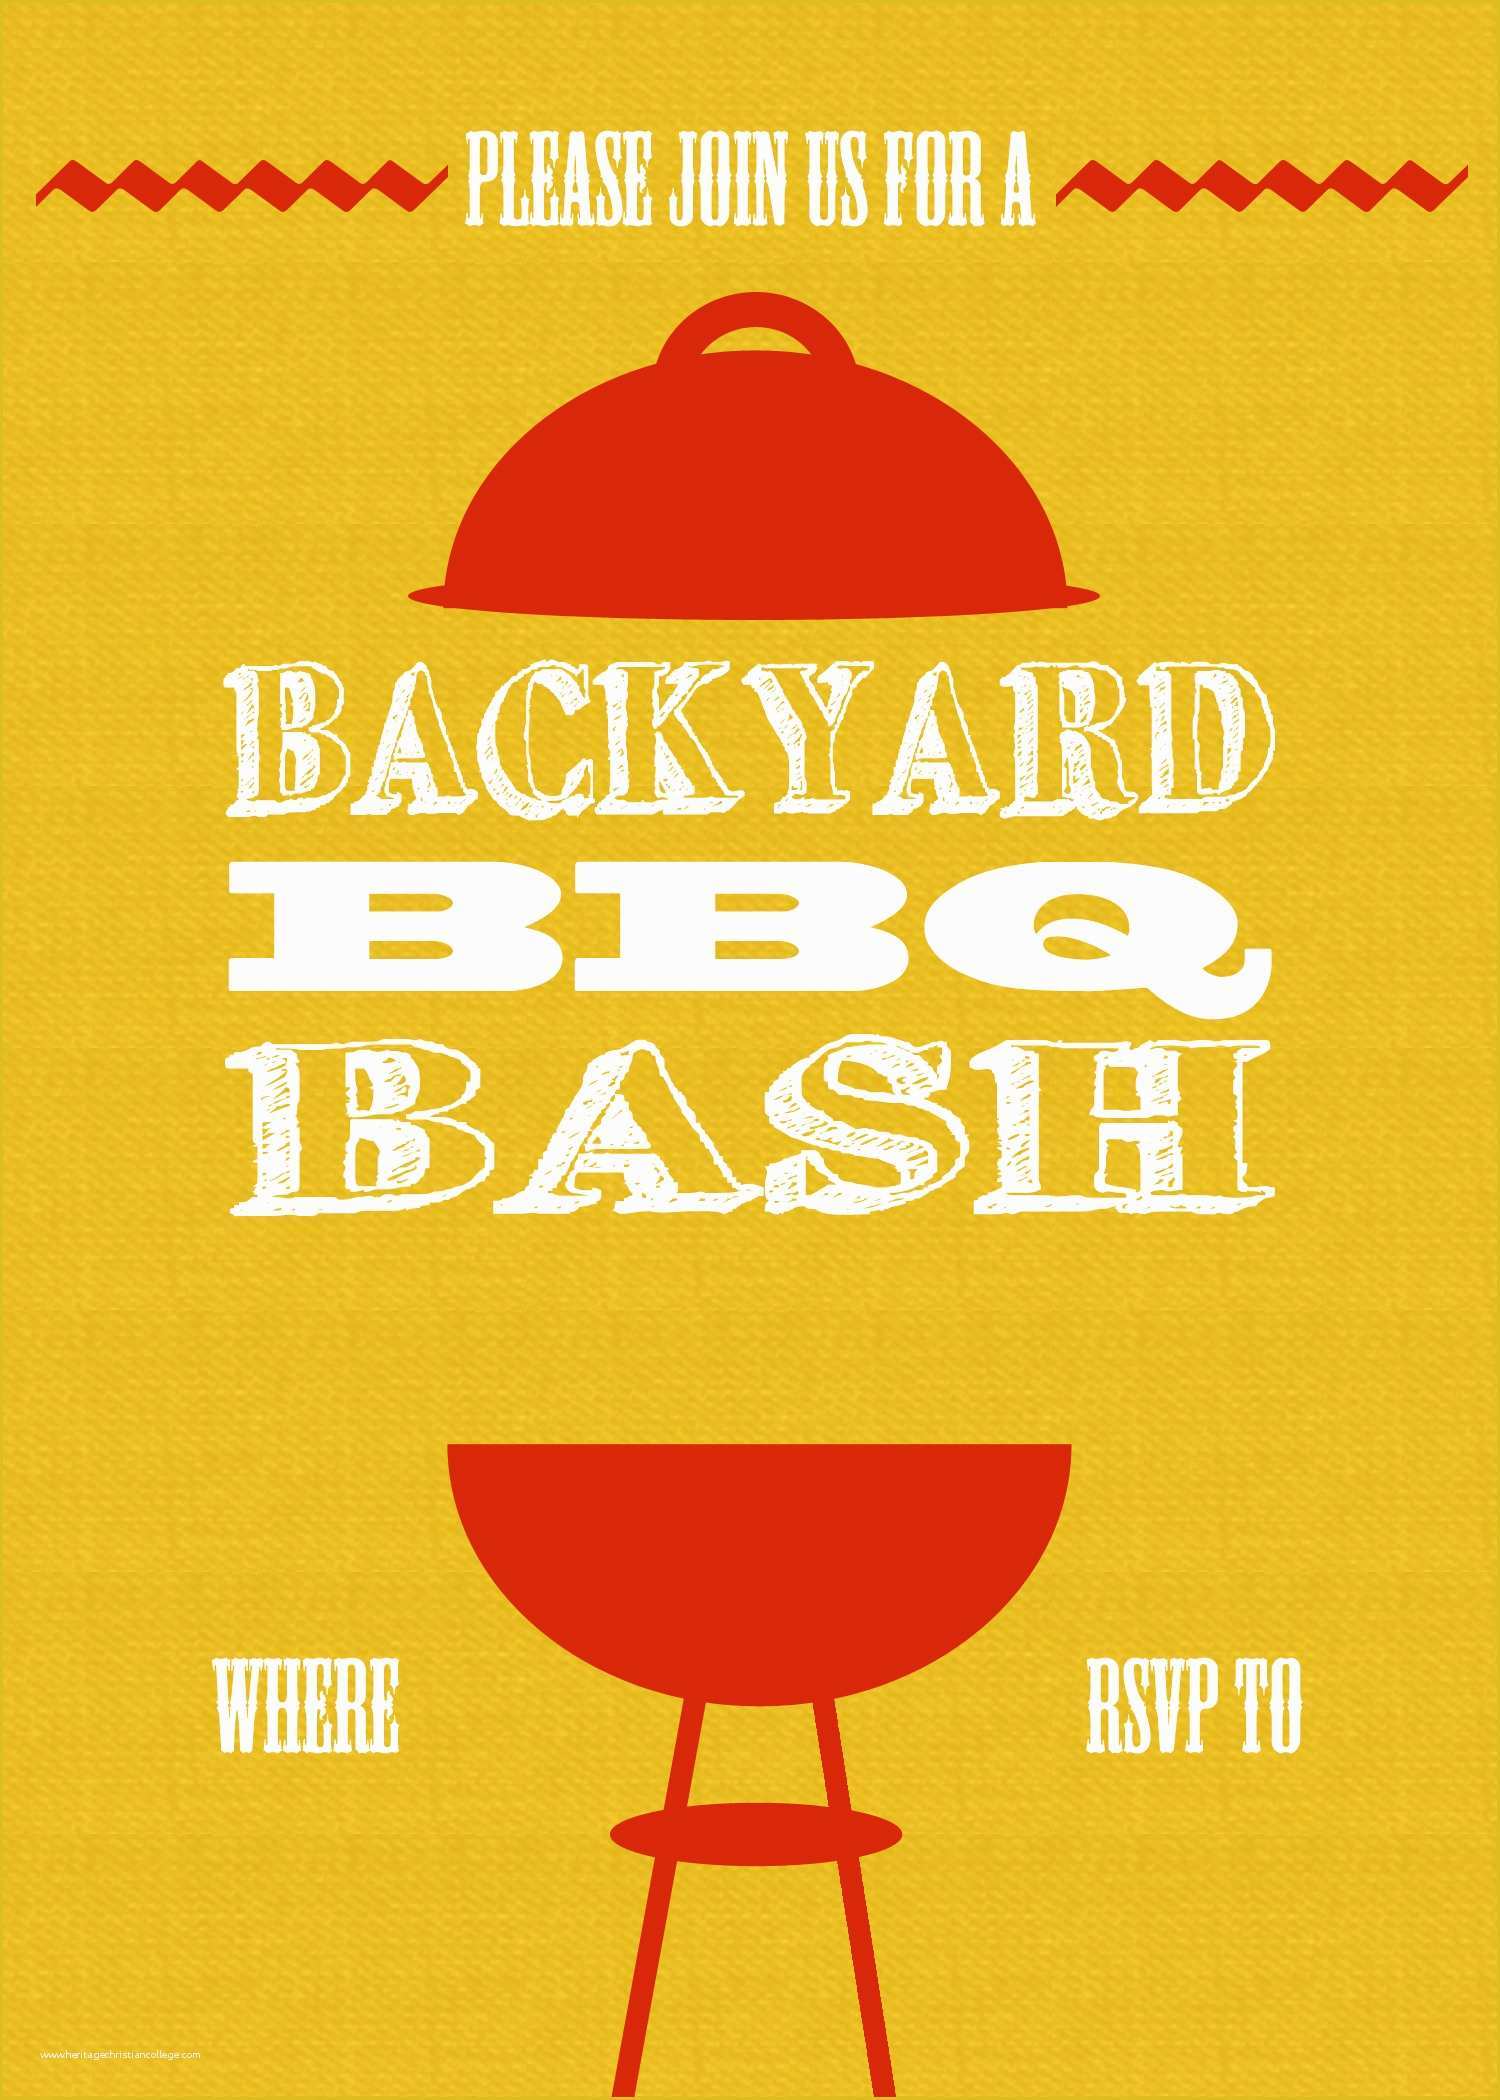 Free Bbq Invitation Template Of Diy Printable Backyard Bbq Bash Invite